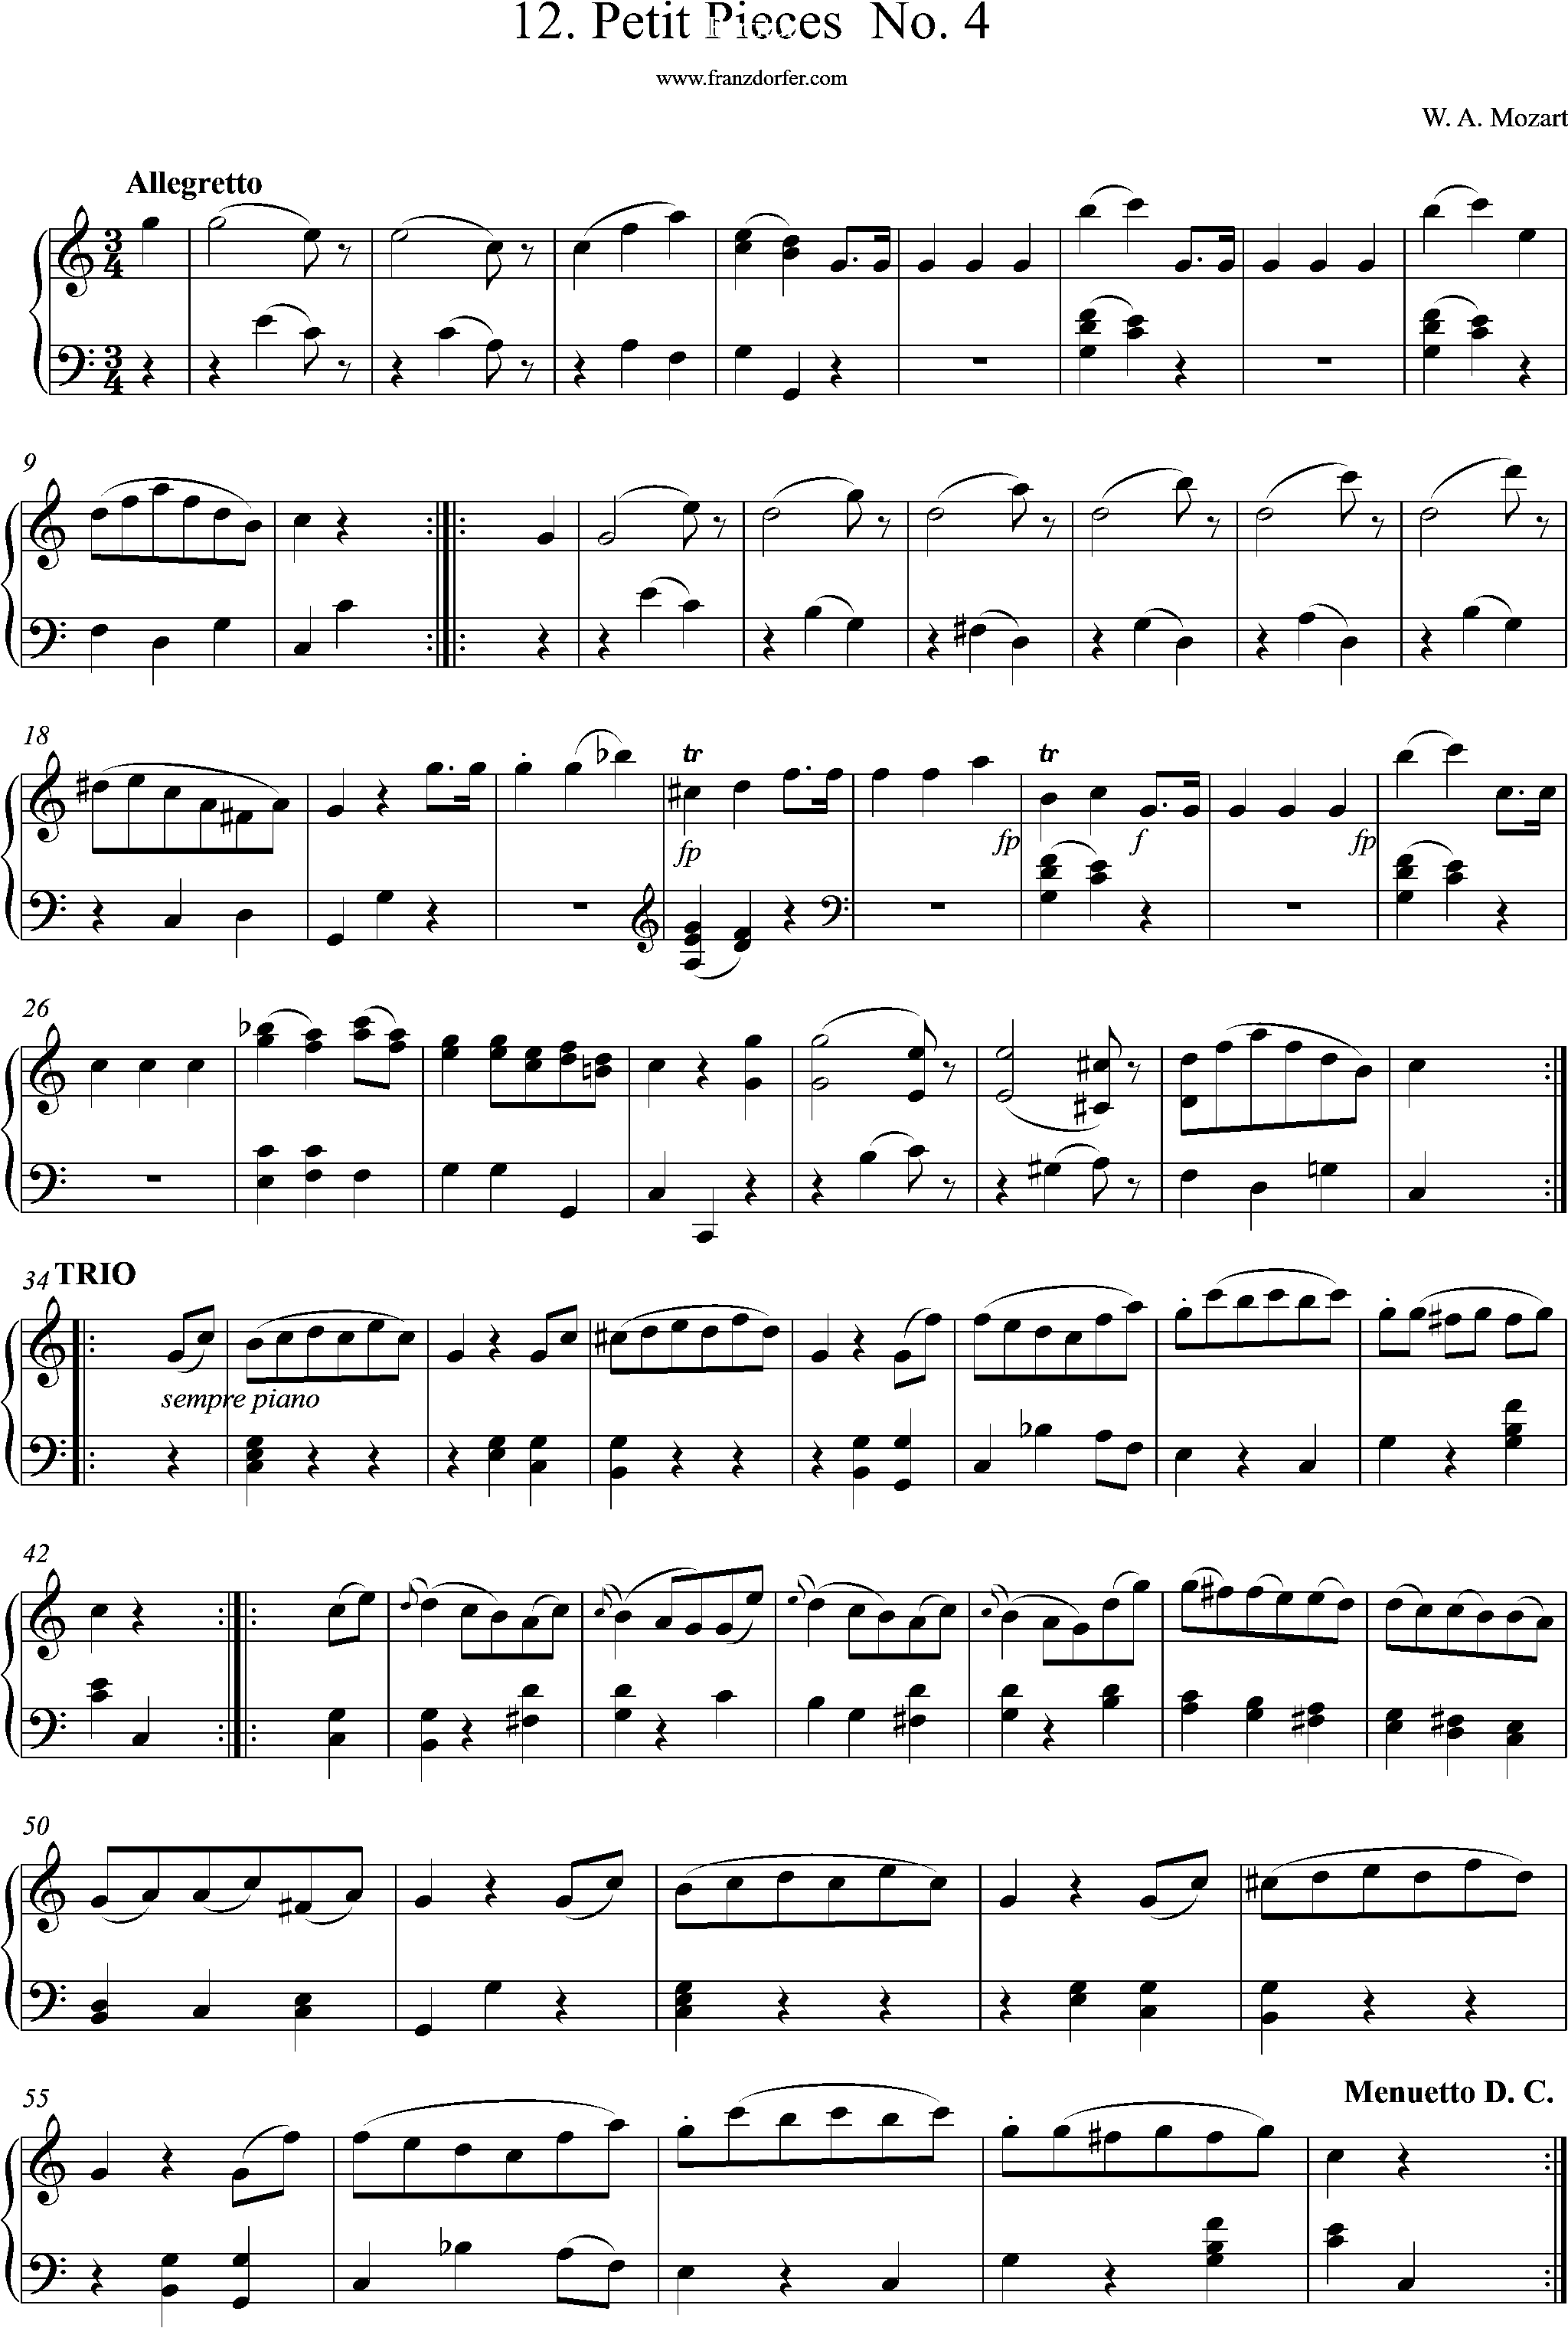 menuetto, 12 Petit piesces, No 4, Mozart, C-Major